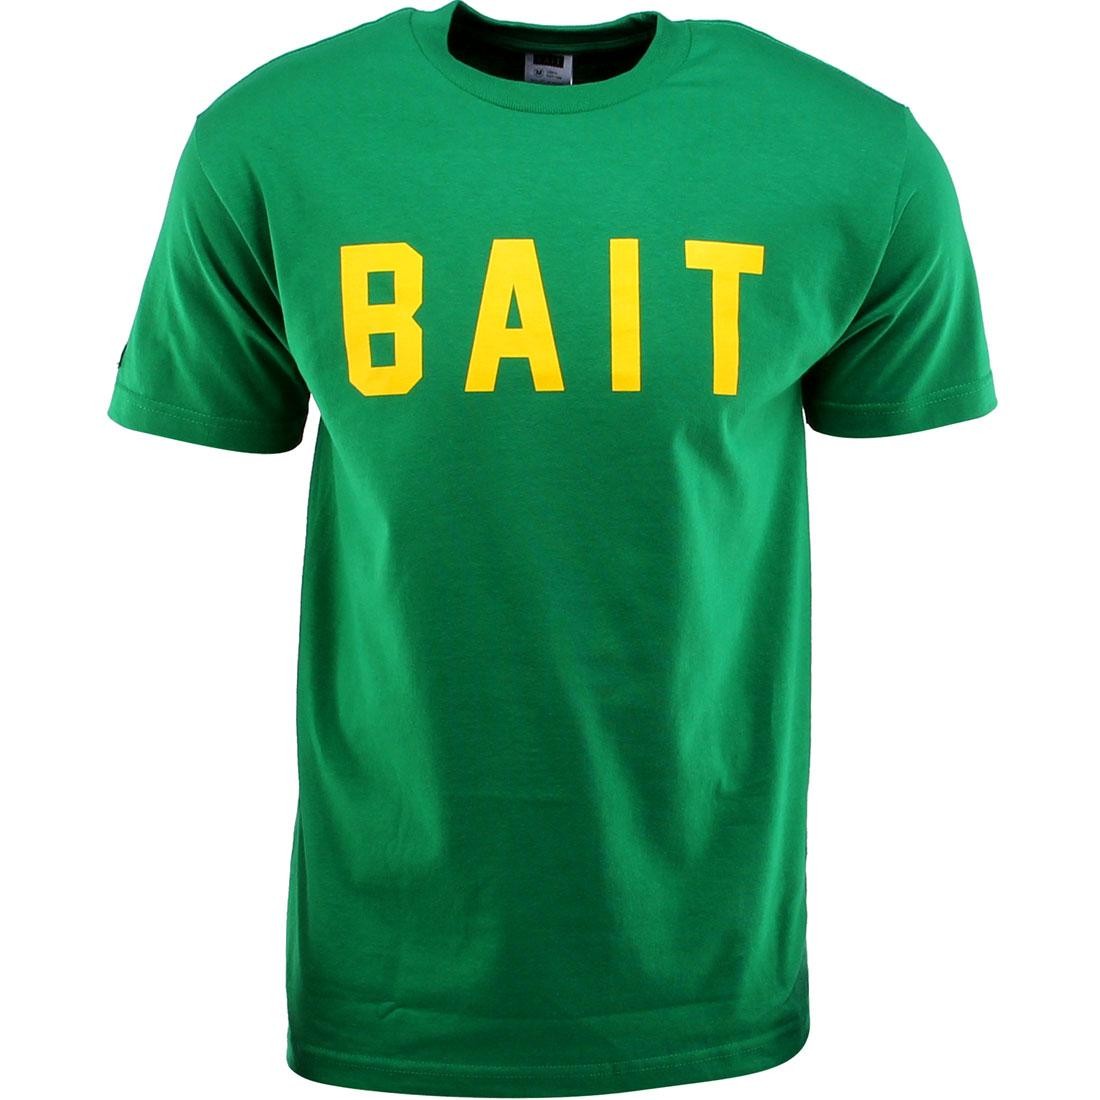 BAIT Logo Tee (green / kelly green / yellow)